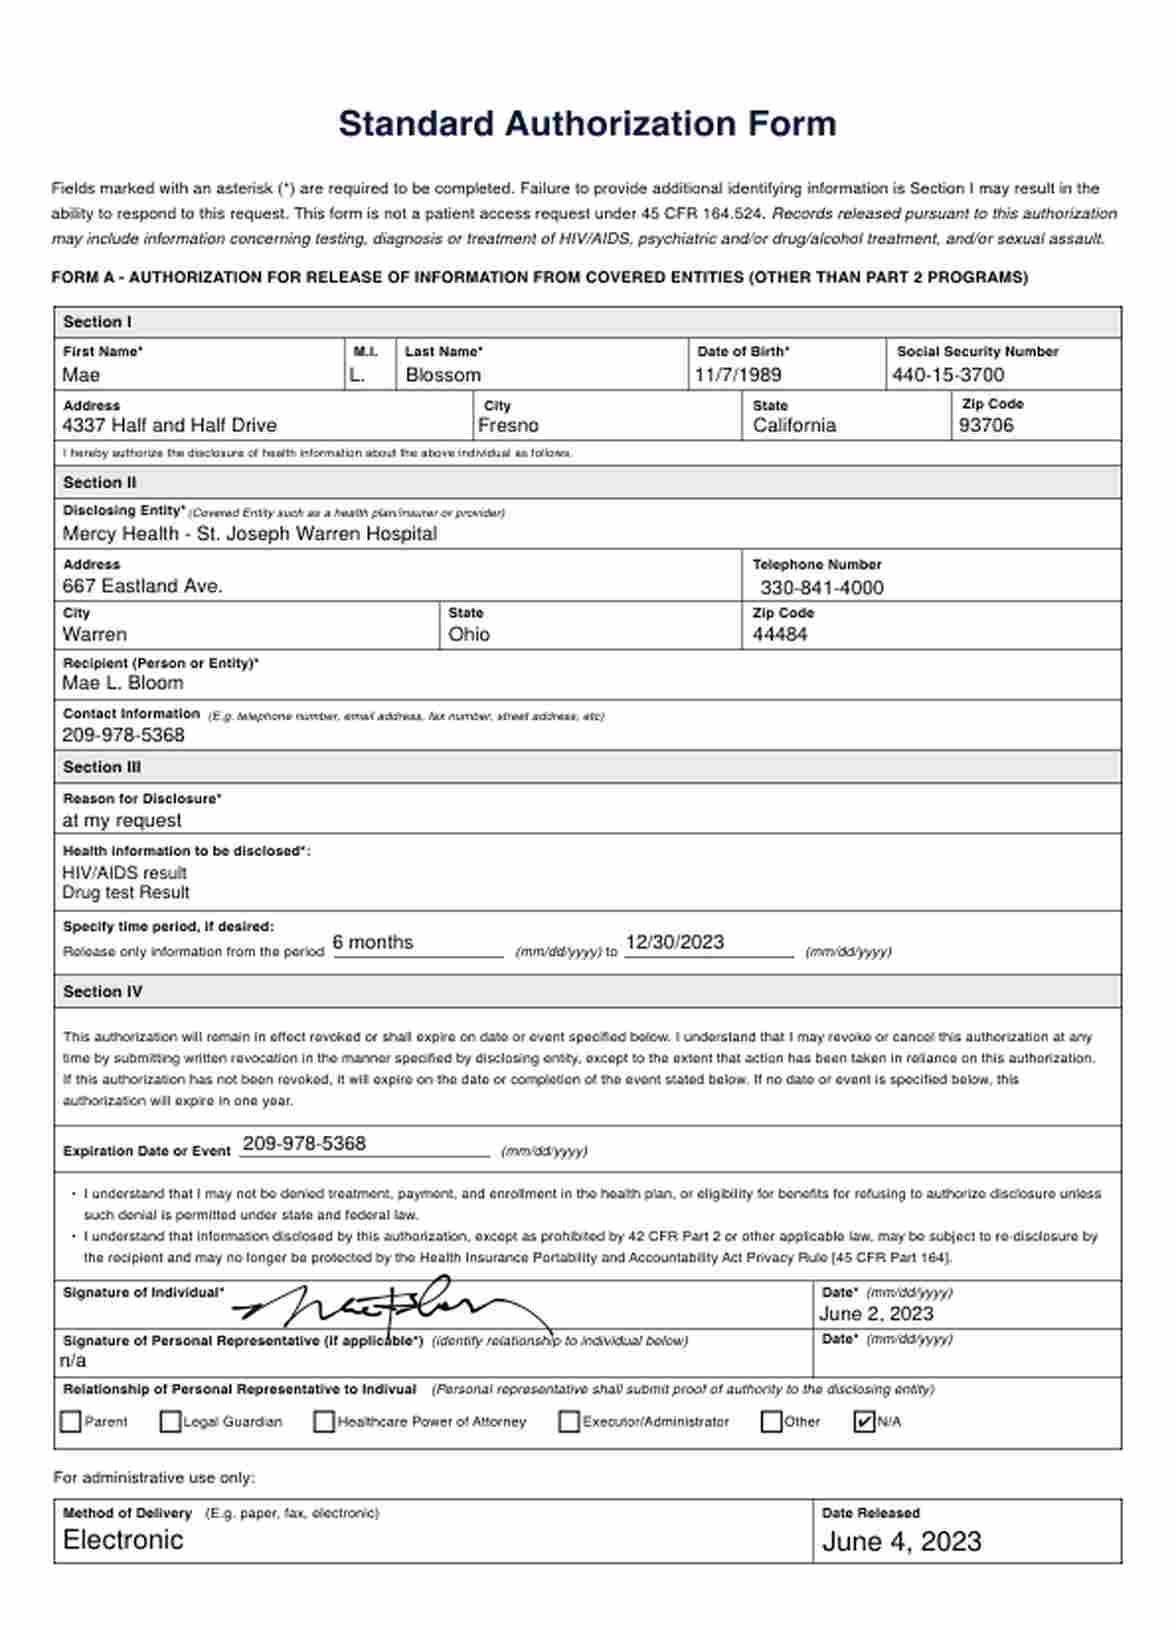 HIPAA Release Form Ohio PDF Example